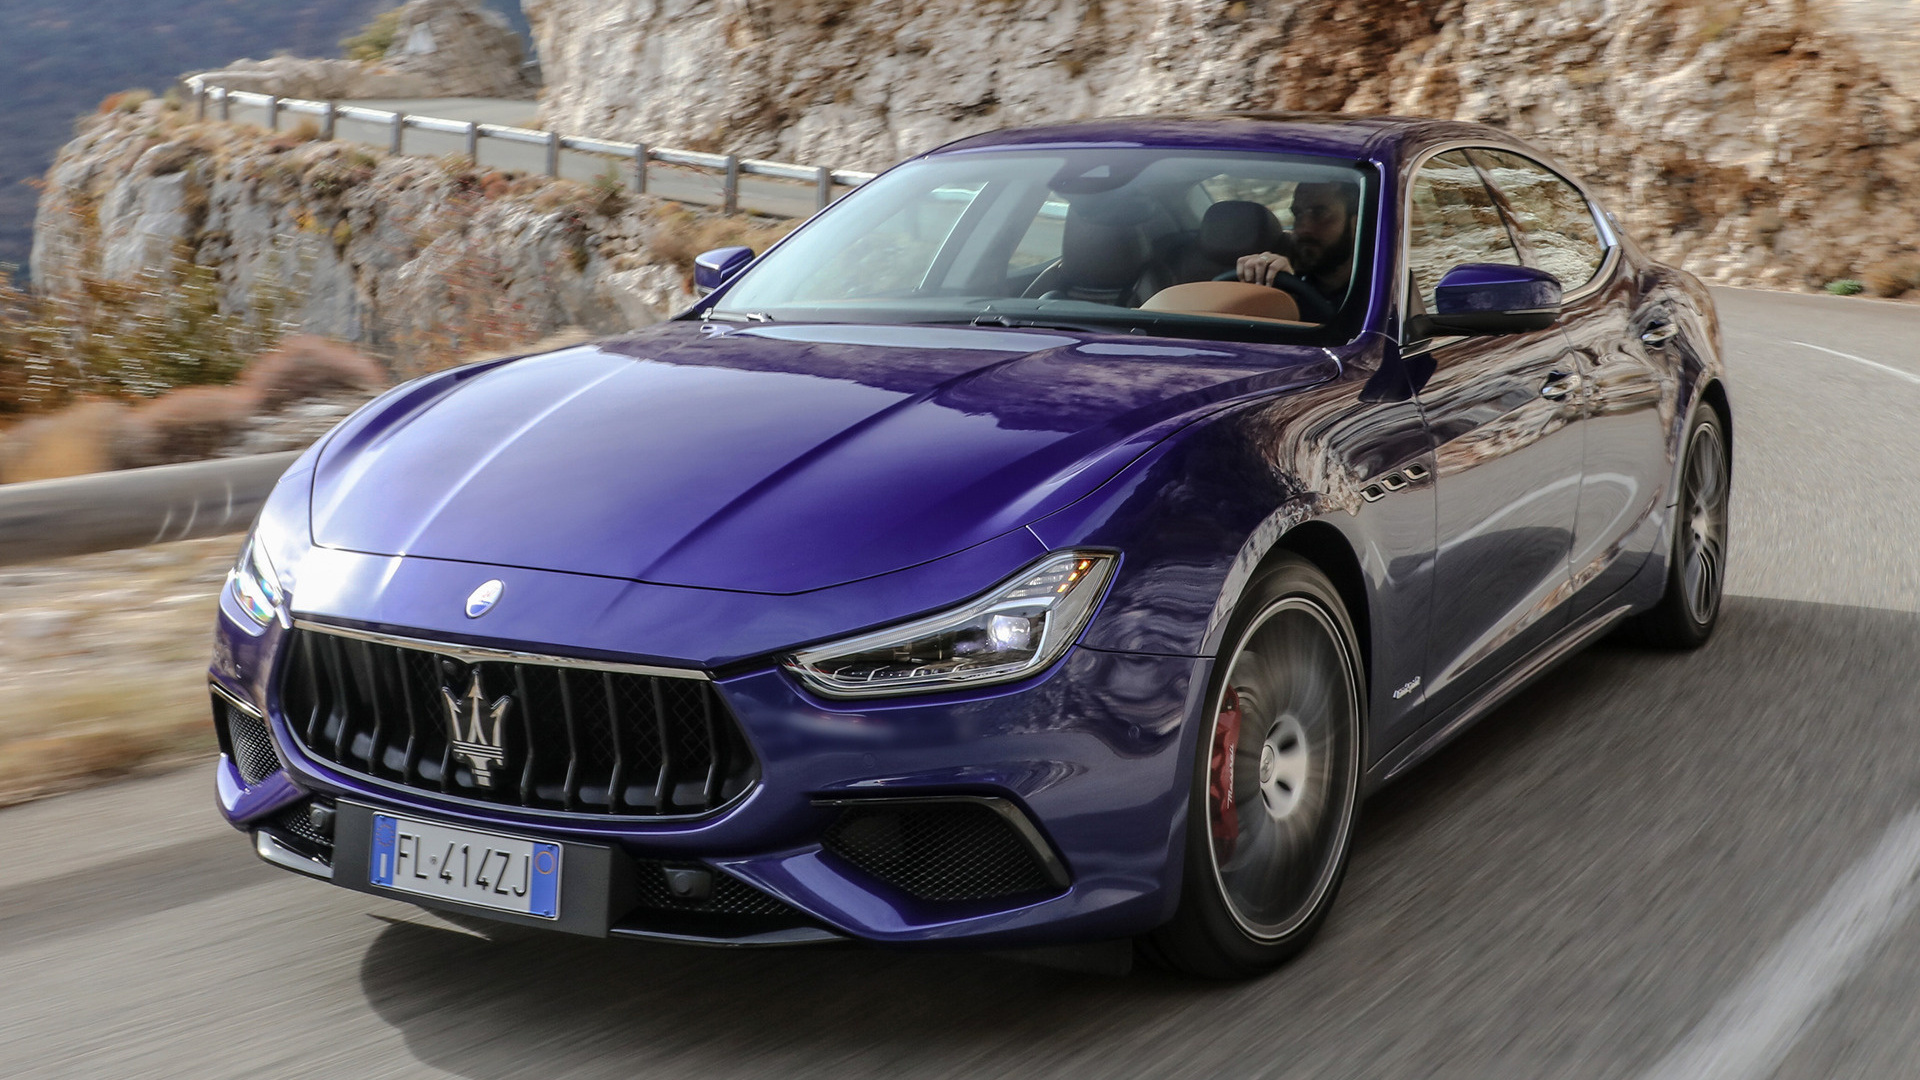 Maserati Ghibli, 2017 model, Gransport edition, HD wallpapers, 1920x1080 Full HD Desktop